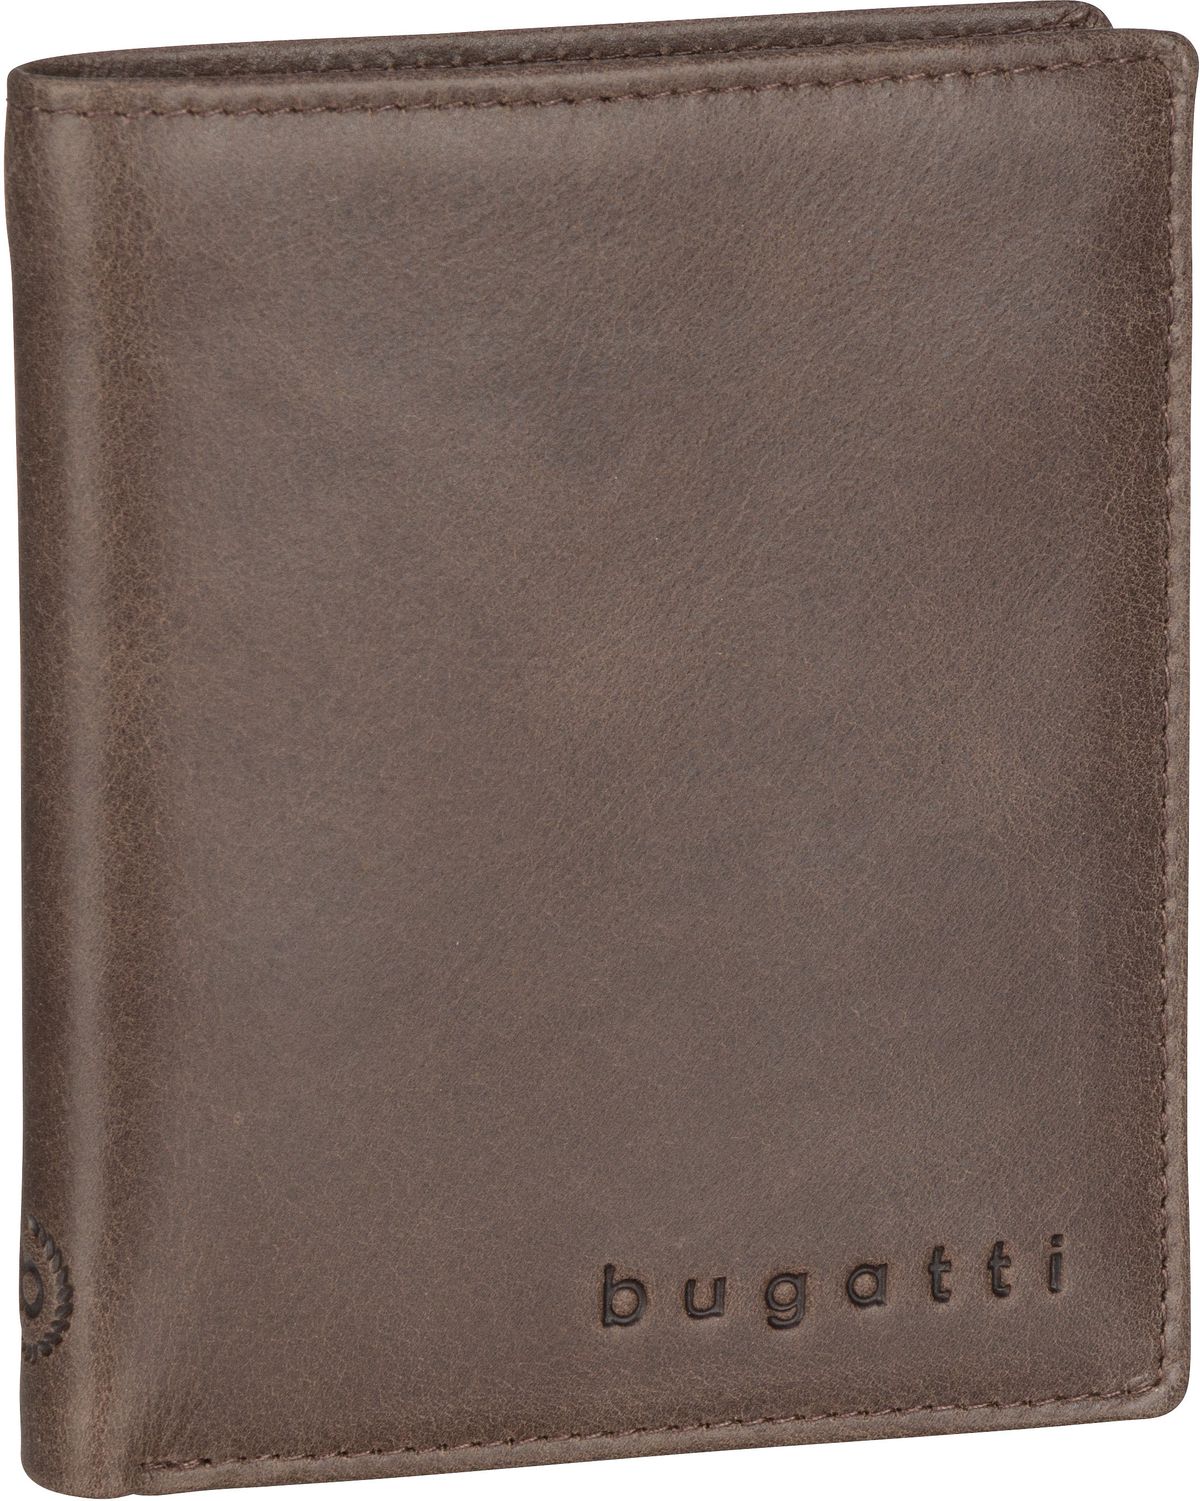 2183 Wallet Volo Bugatti Braun